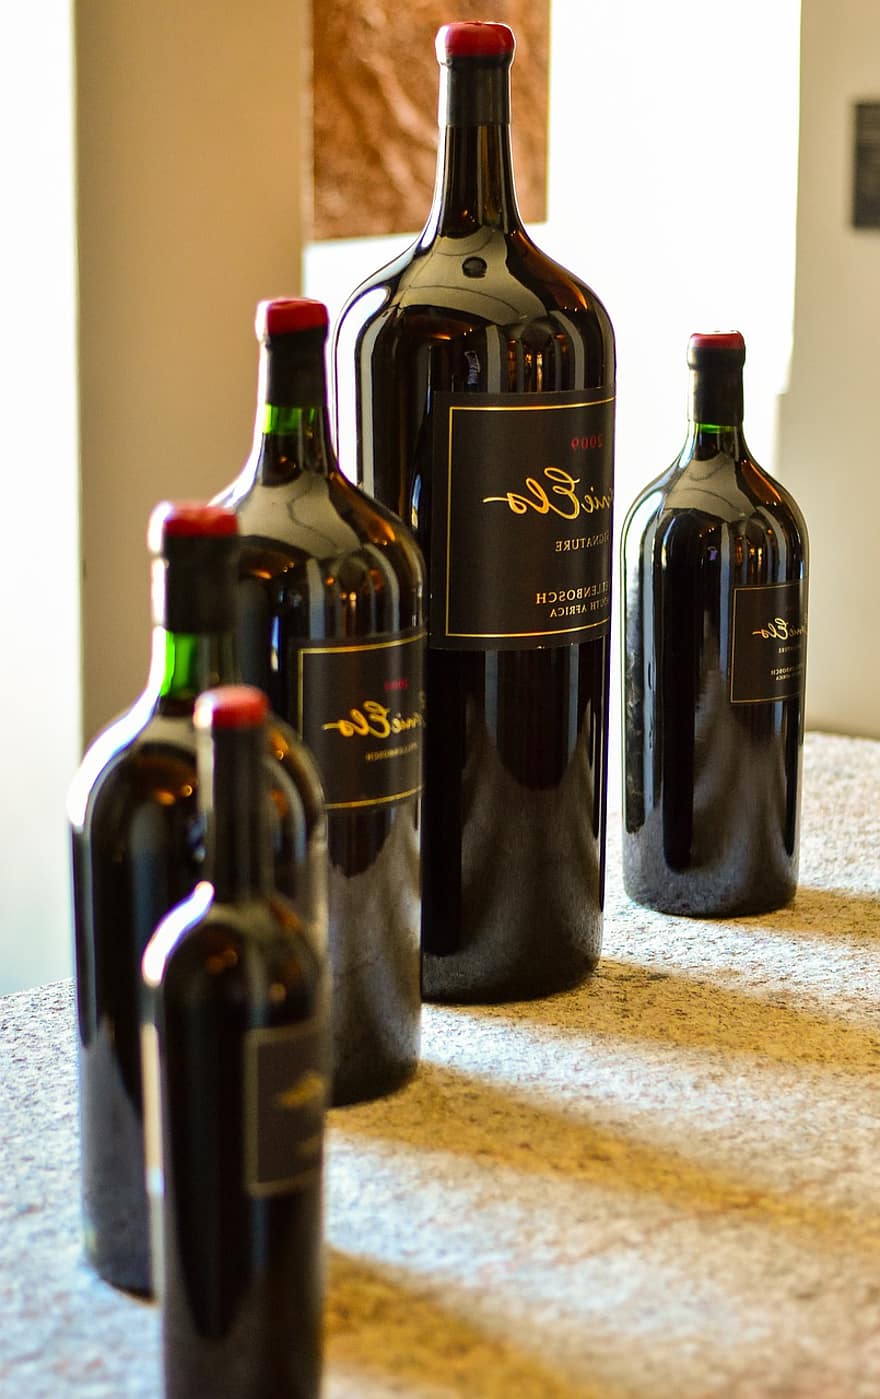 Ernie Els Wines, Wine Bottles, Wine, Winery, bottle, wine bottle, alcohol, drink, close-up, liquid, glass